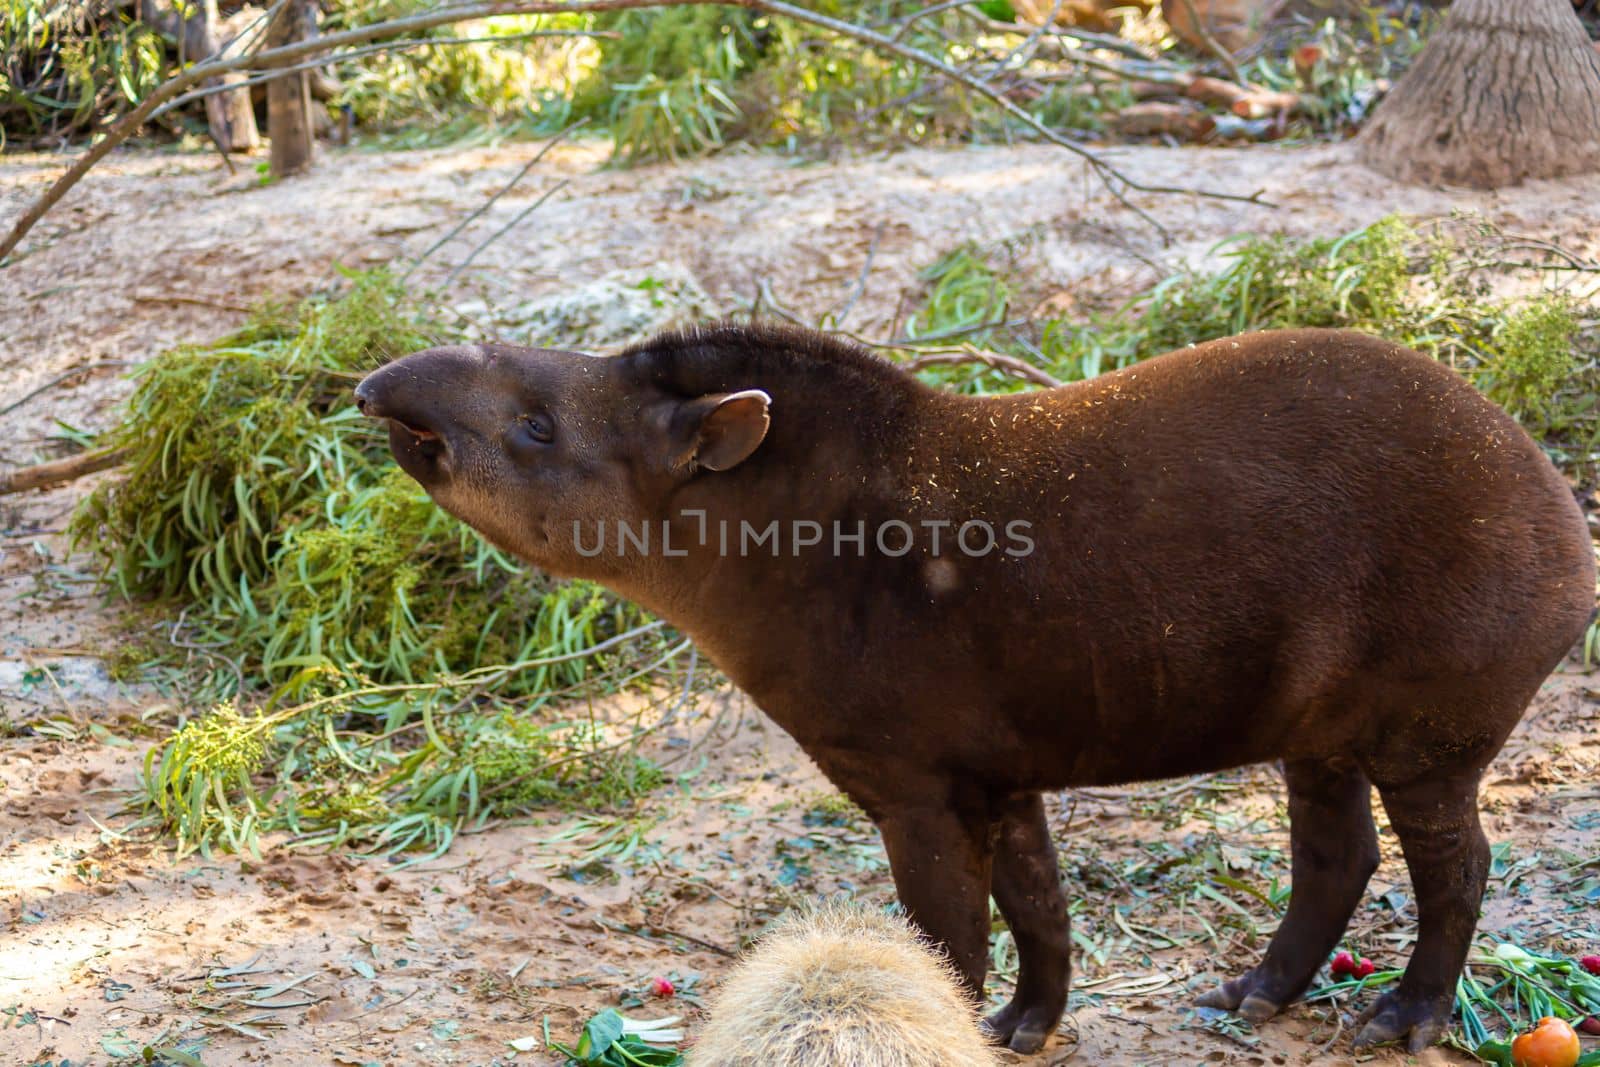 Live tapir in the forest habitat.